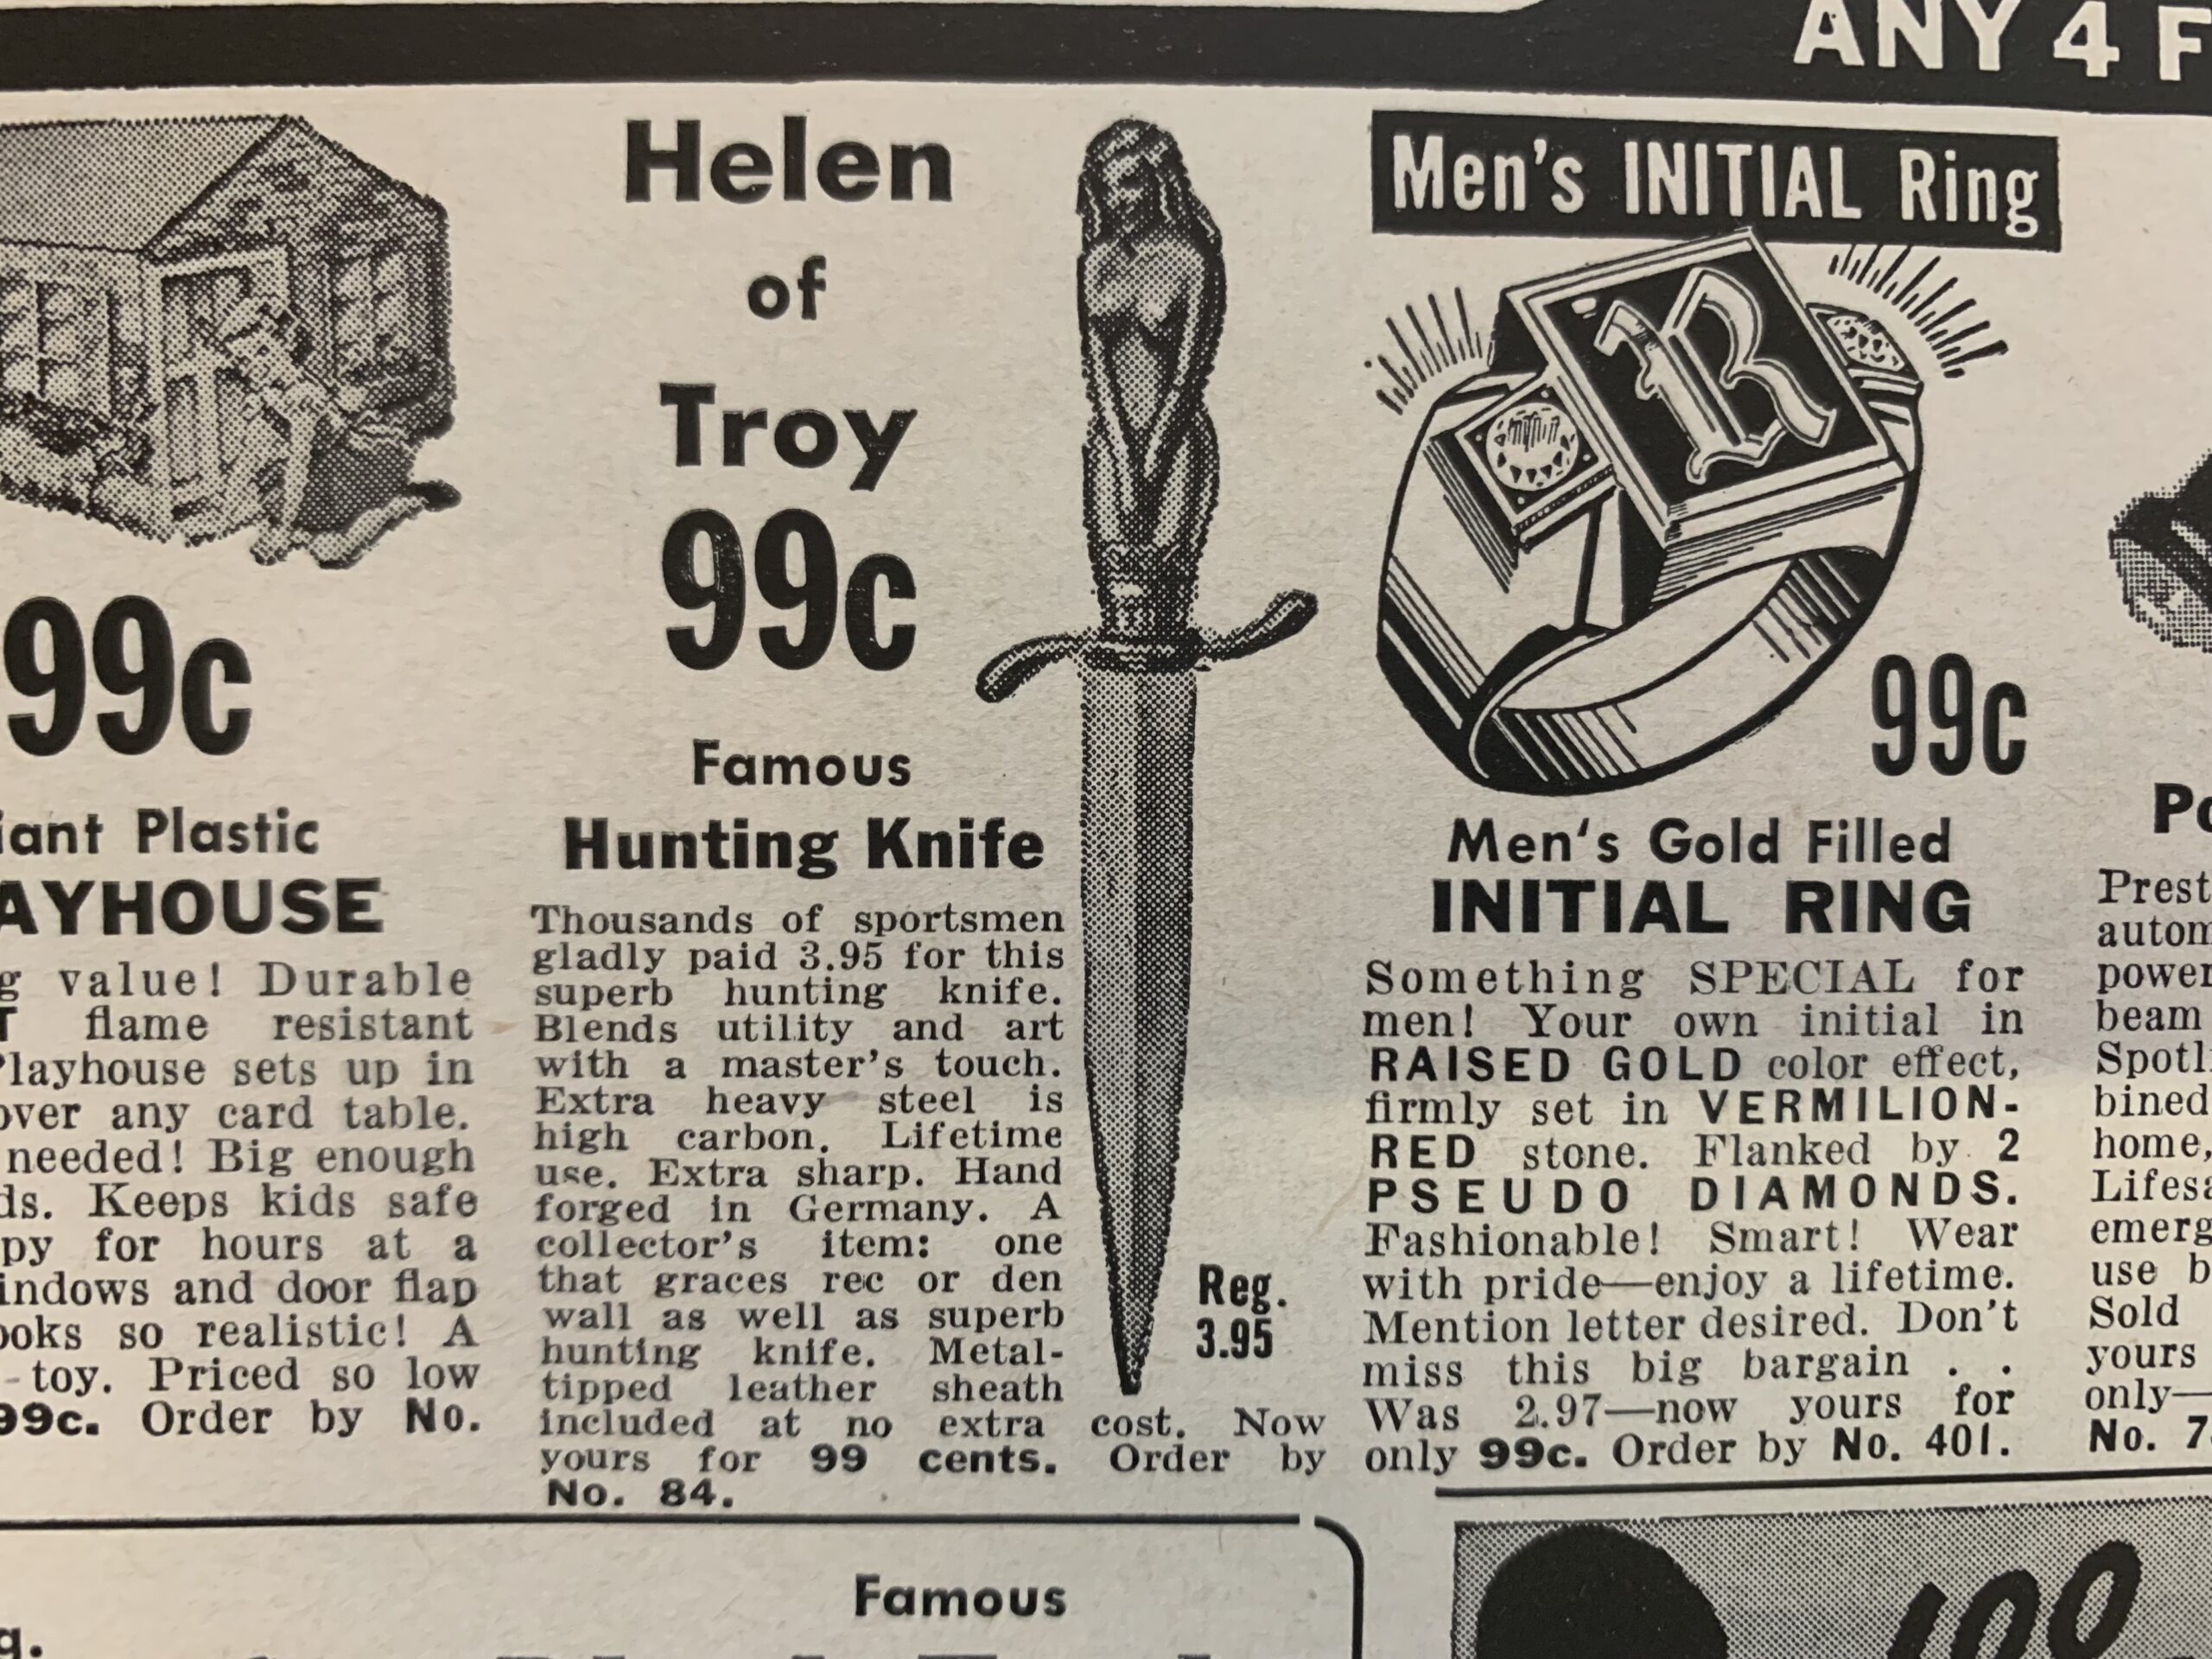 Vintage Helen of Troy hunting knife advertisement.